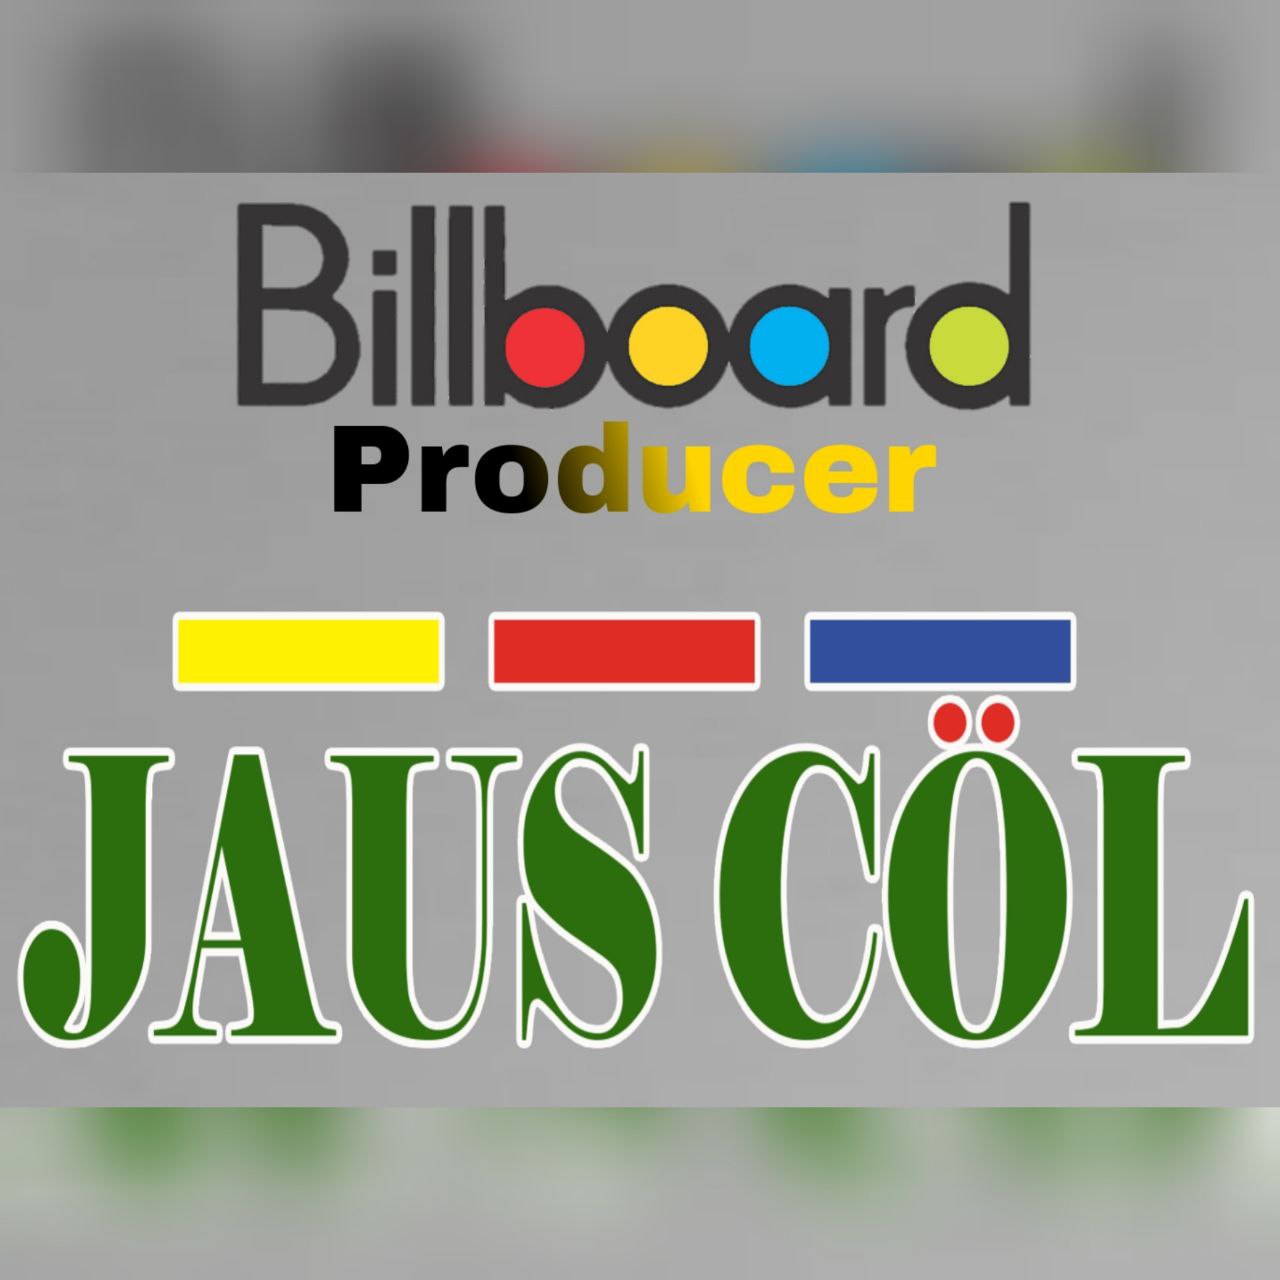 JausCol